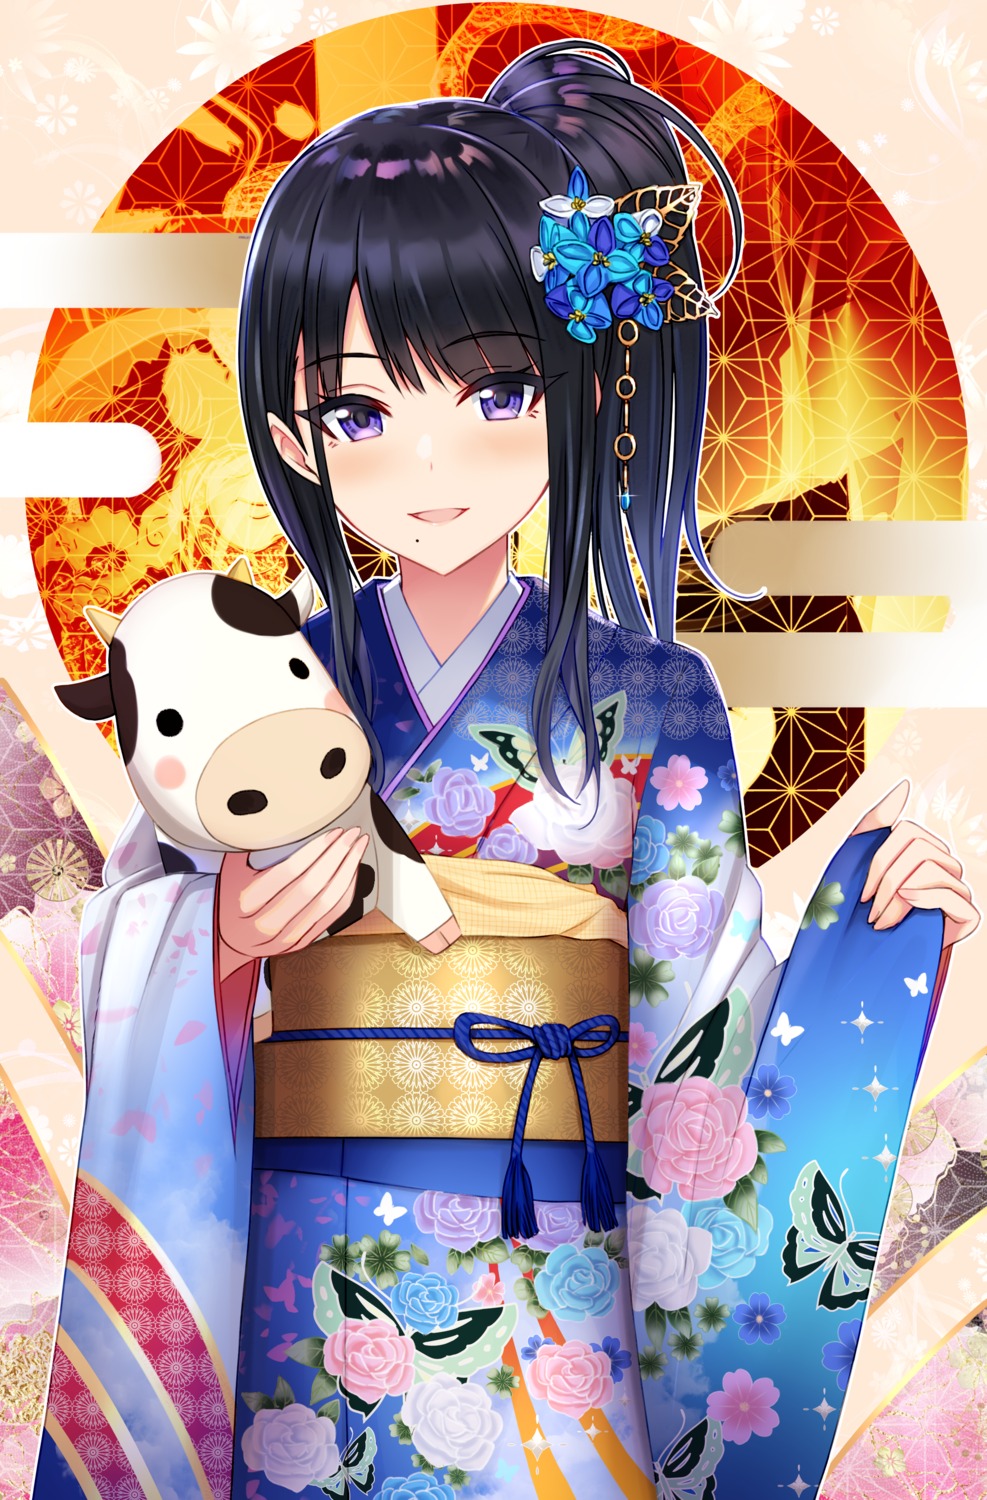 kazano_hiori kimono miyar2d2 the_idolm@ster the_idolm@ster_shiny_colors